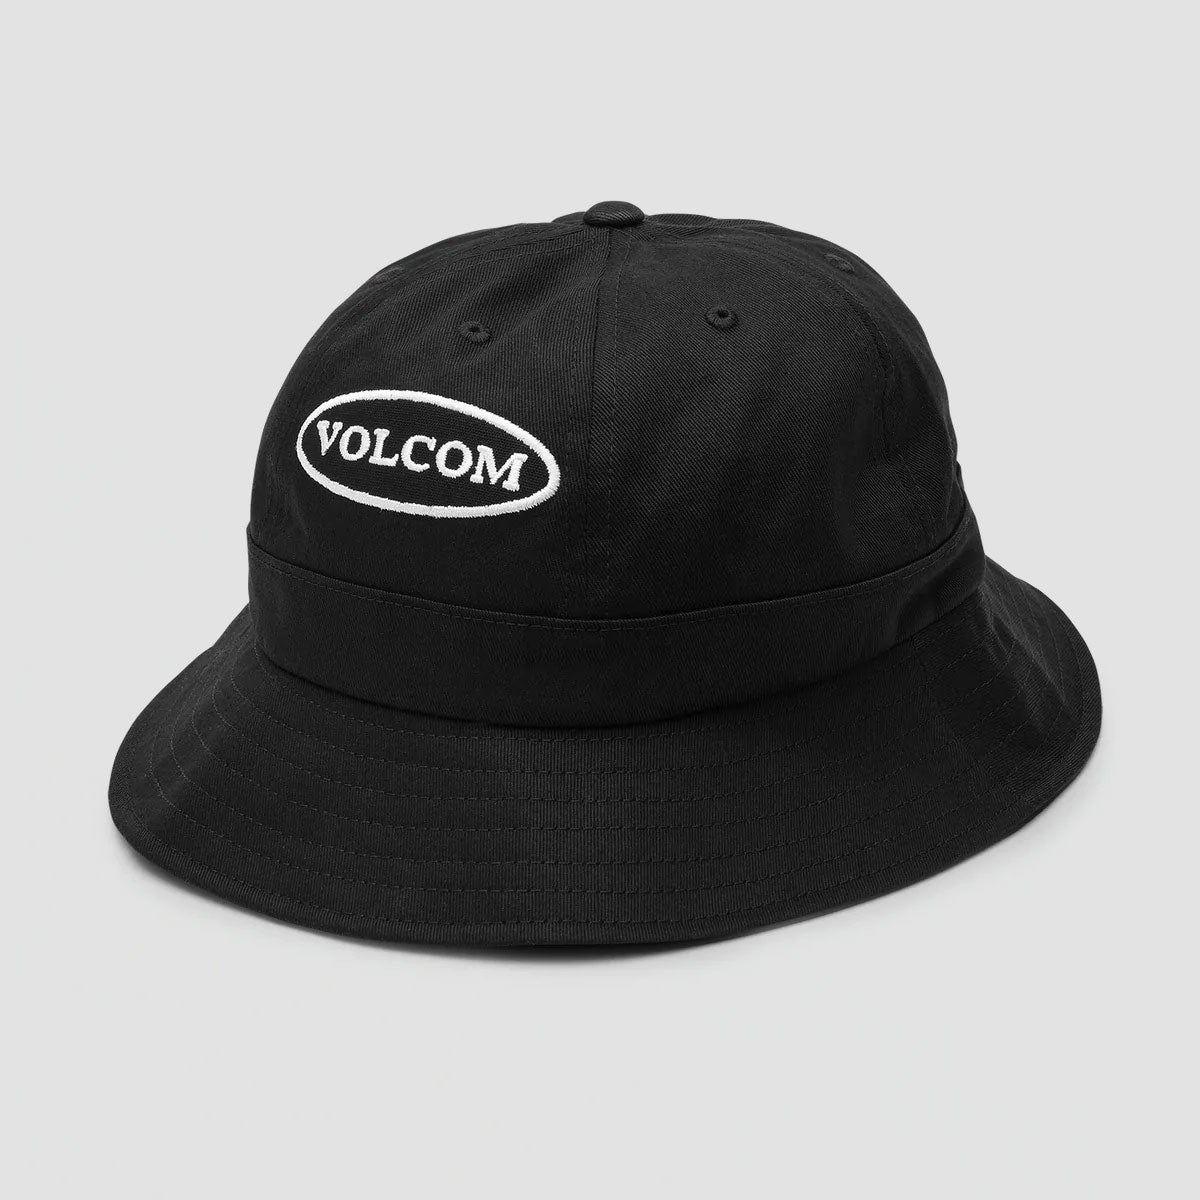 Volcom Swirley Bucket Hat Black